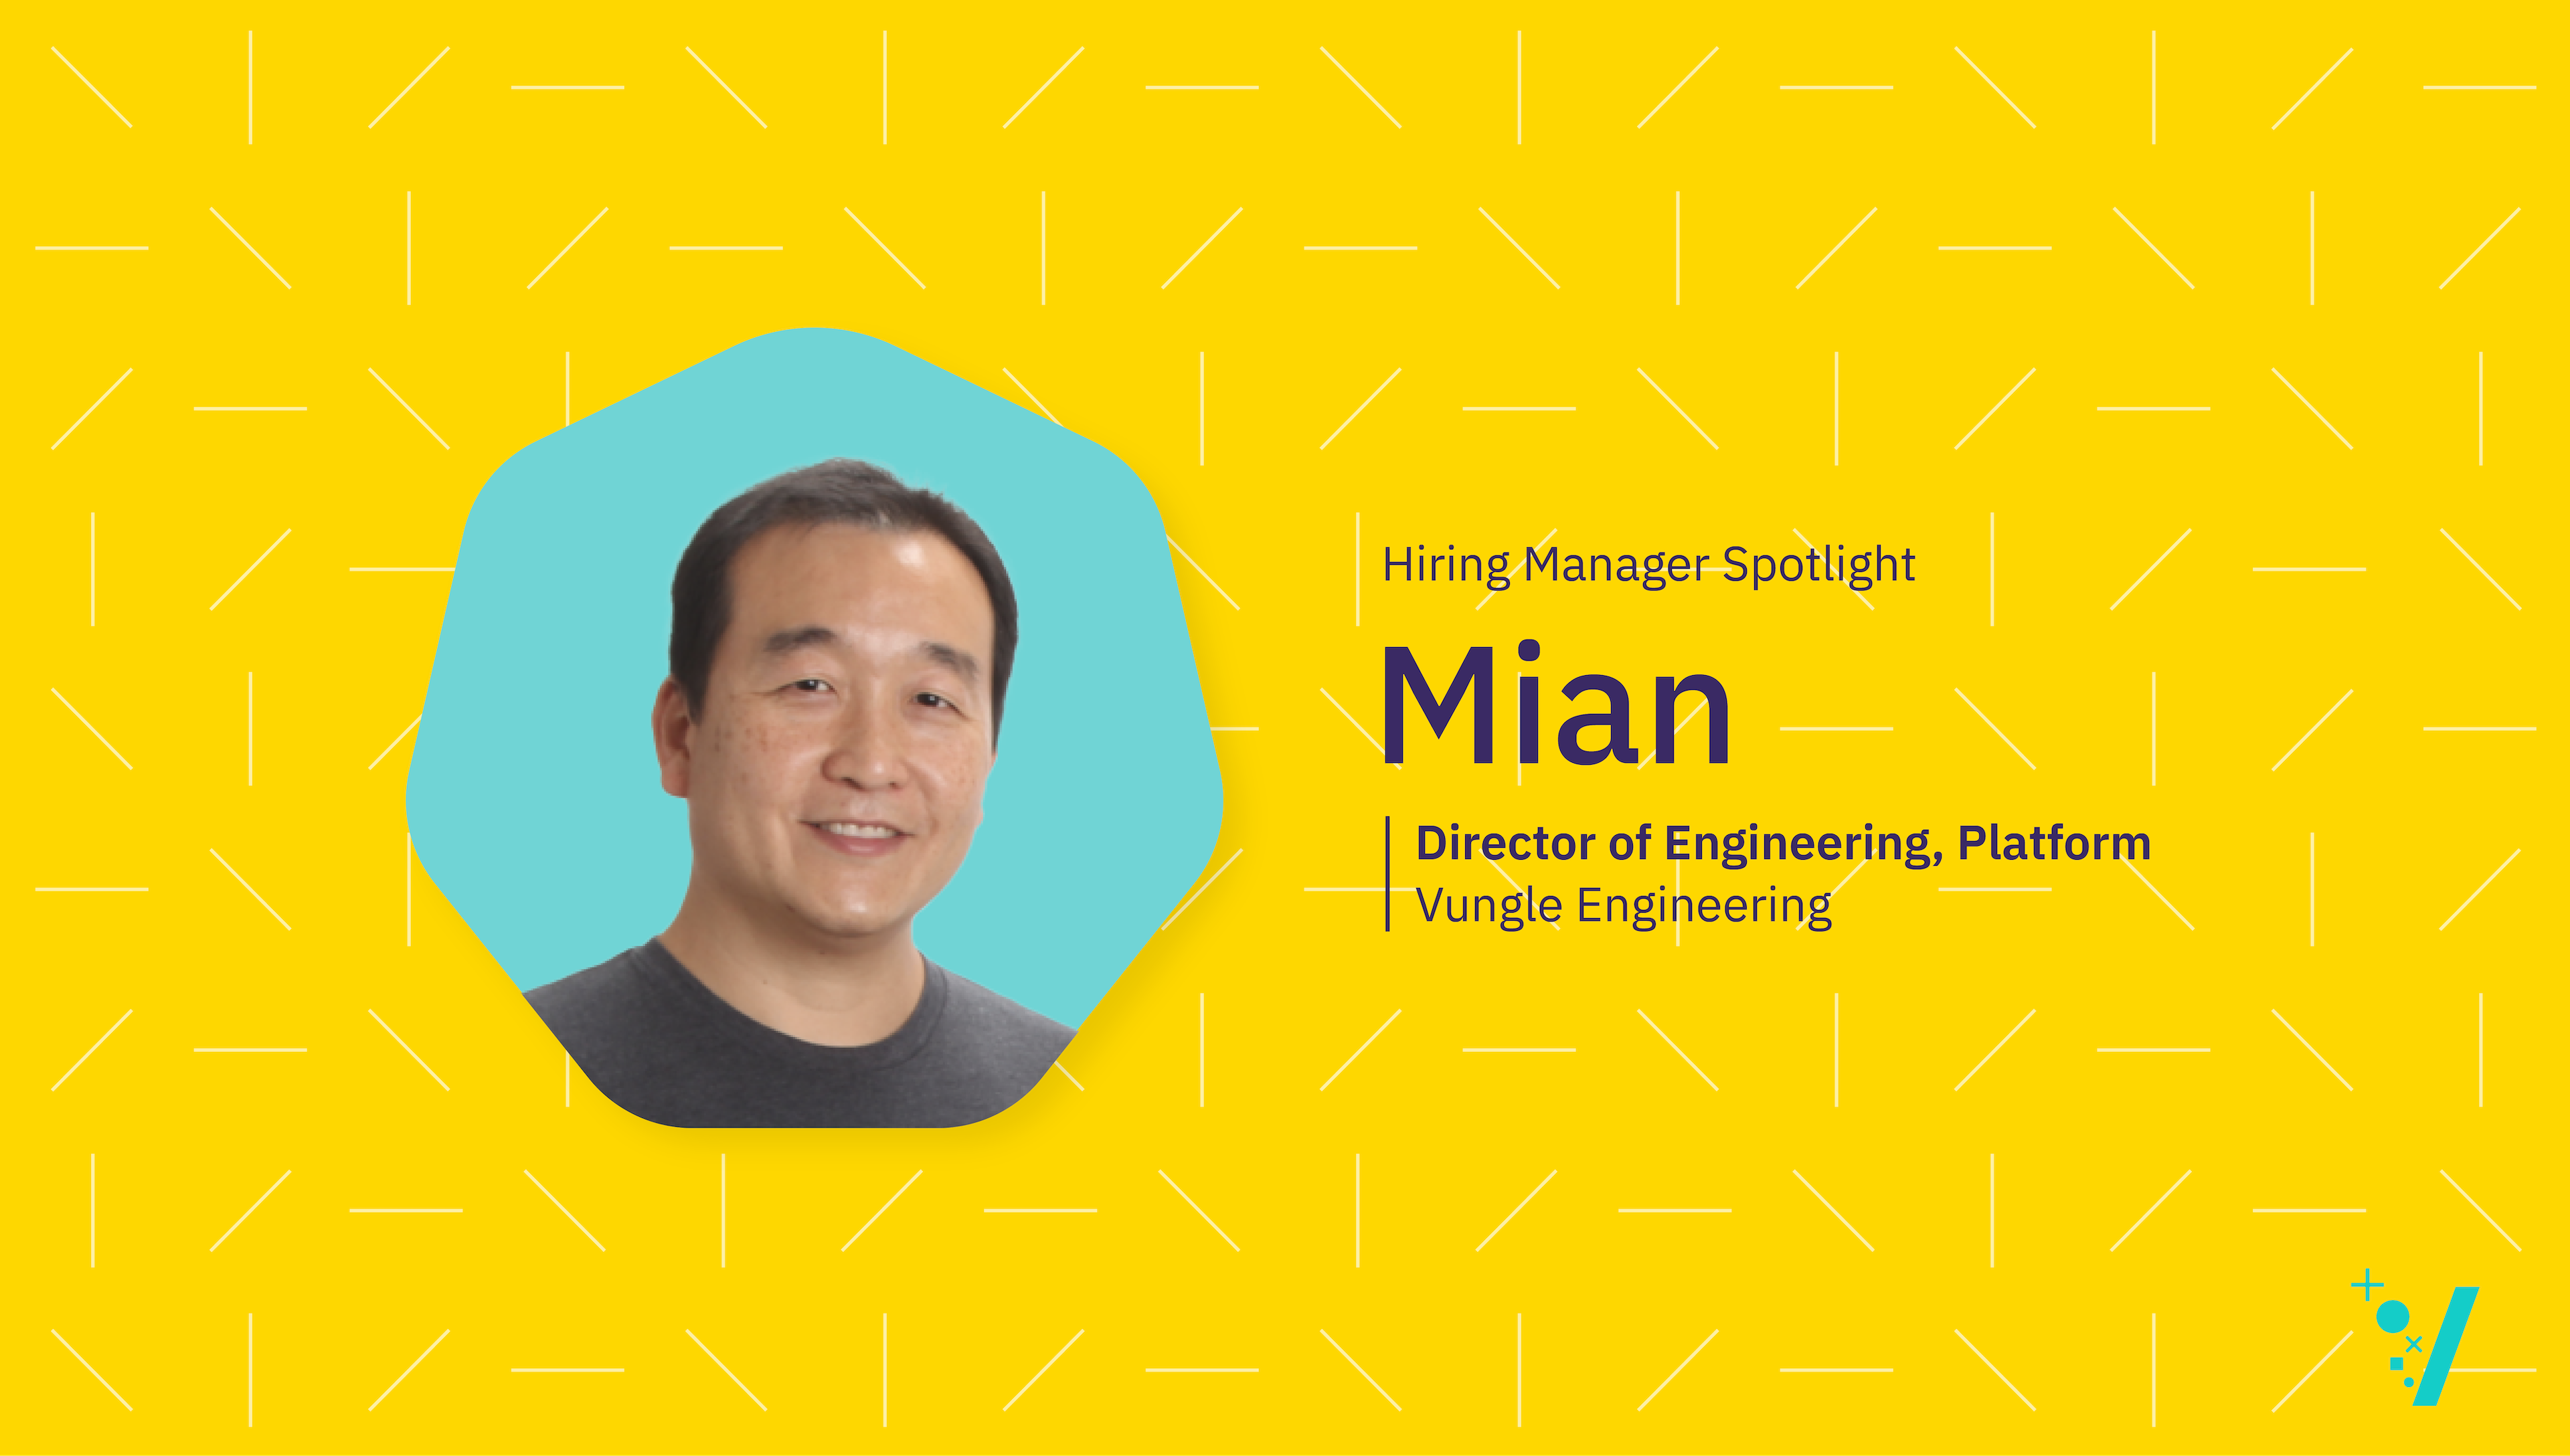 Meet Mian and the Platform Engineering Department